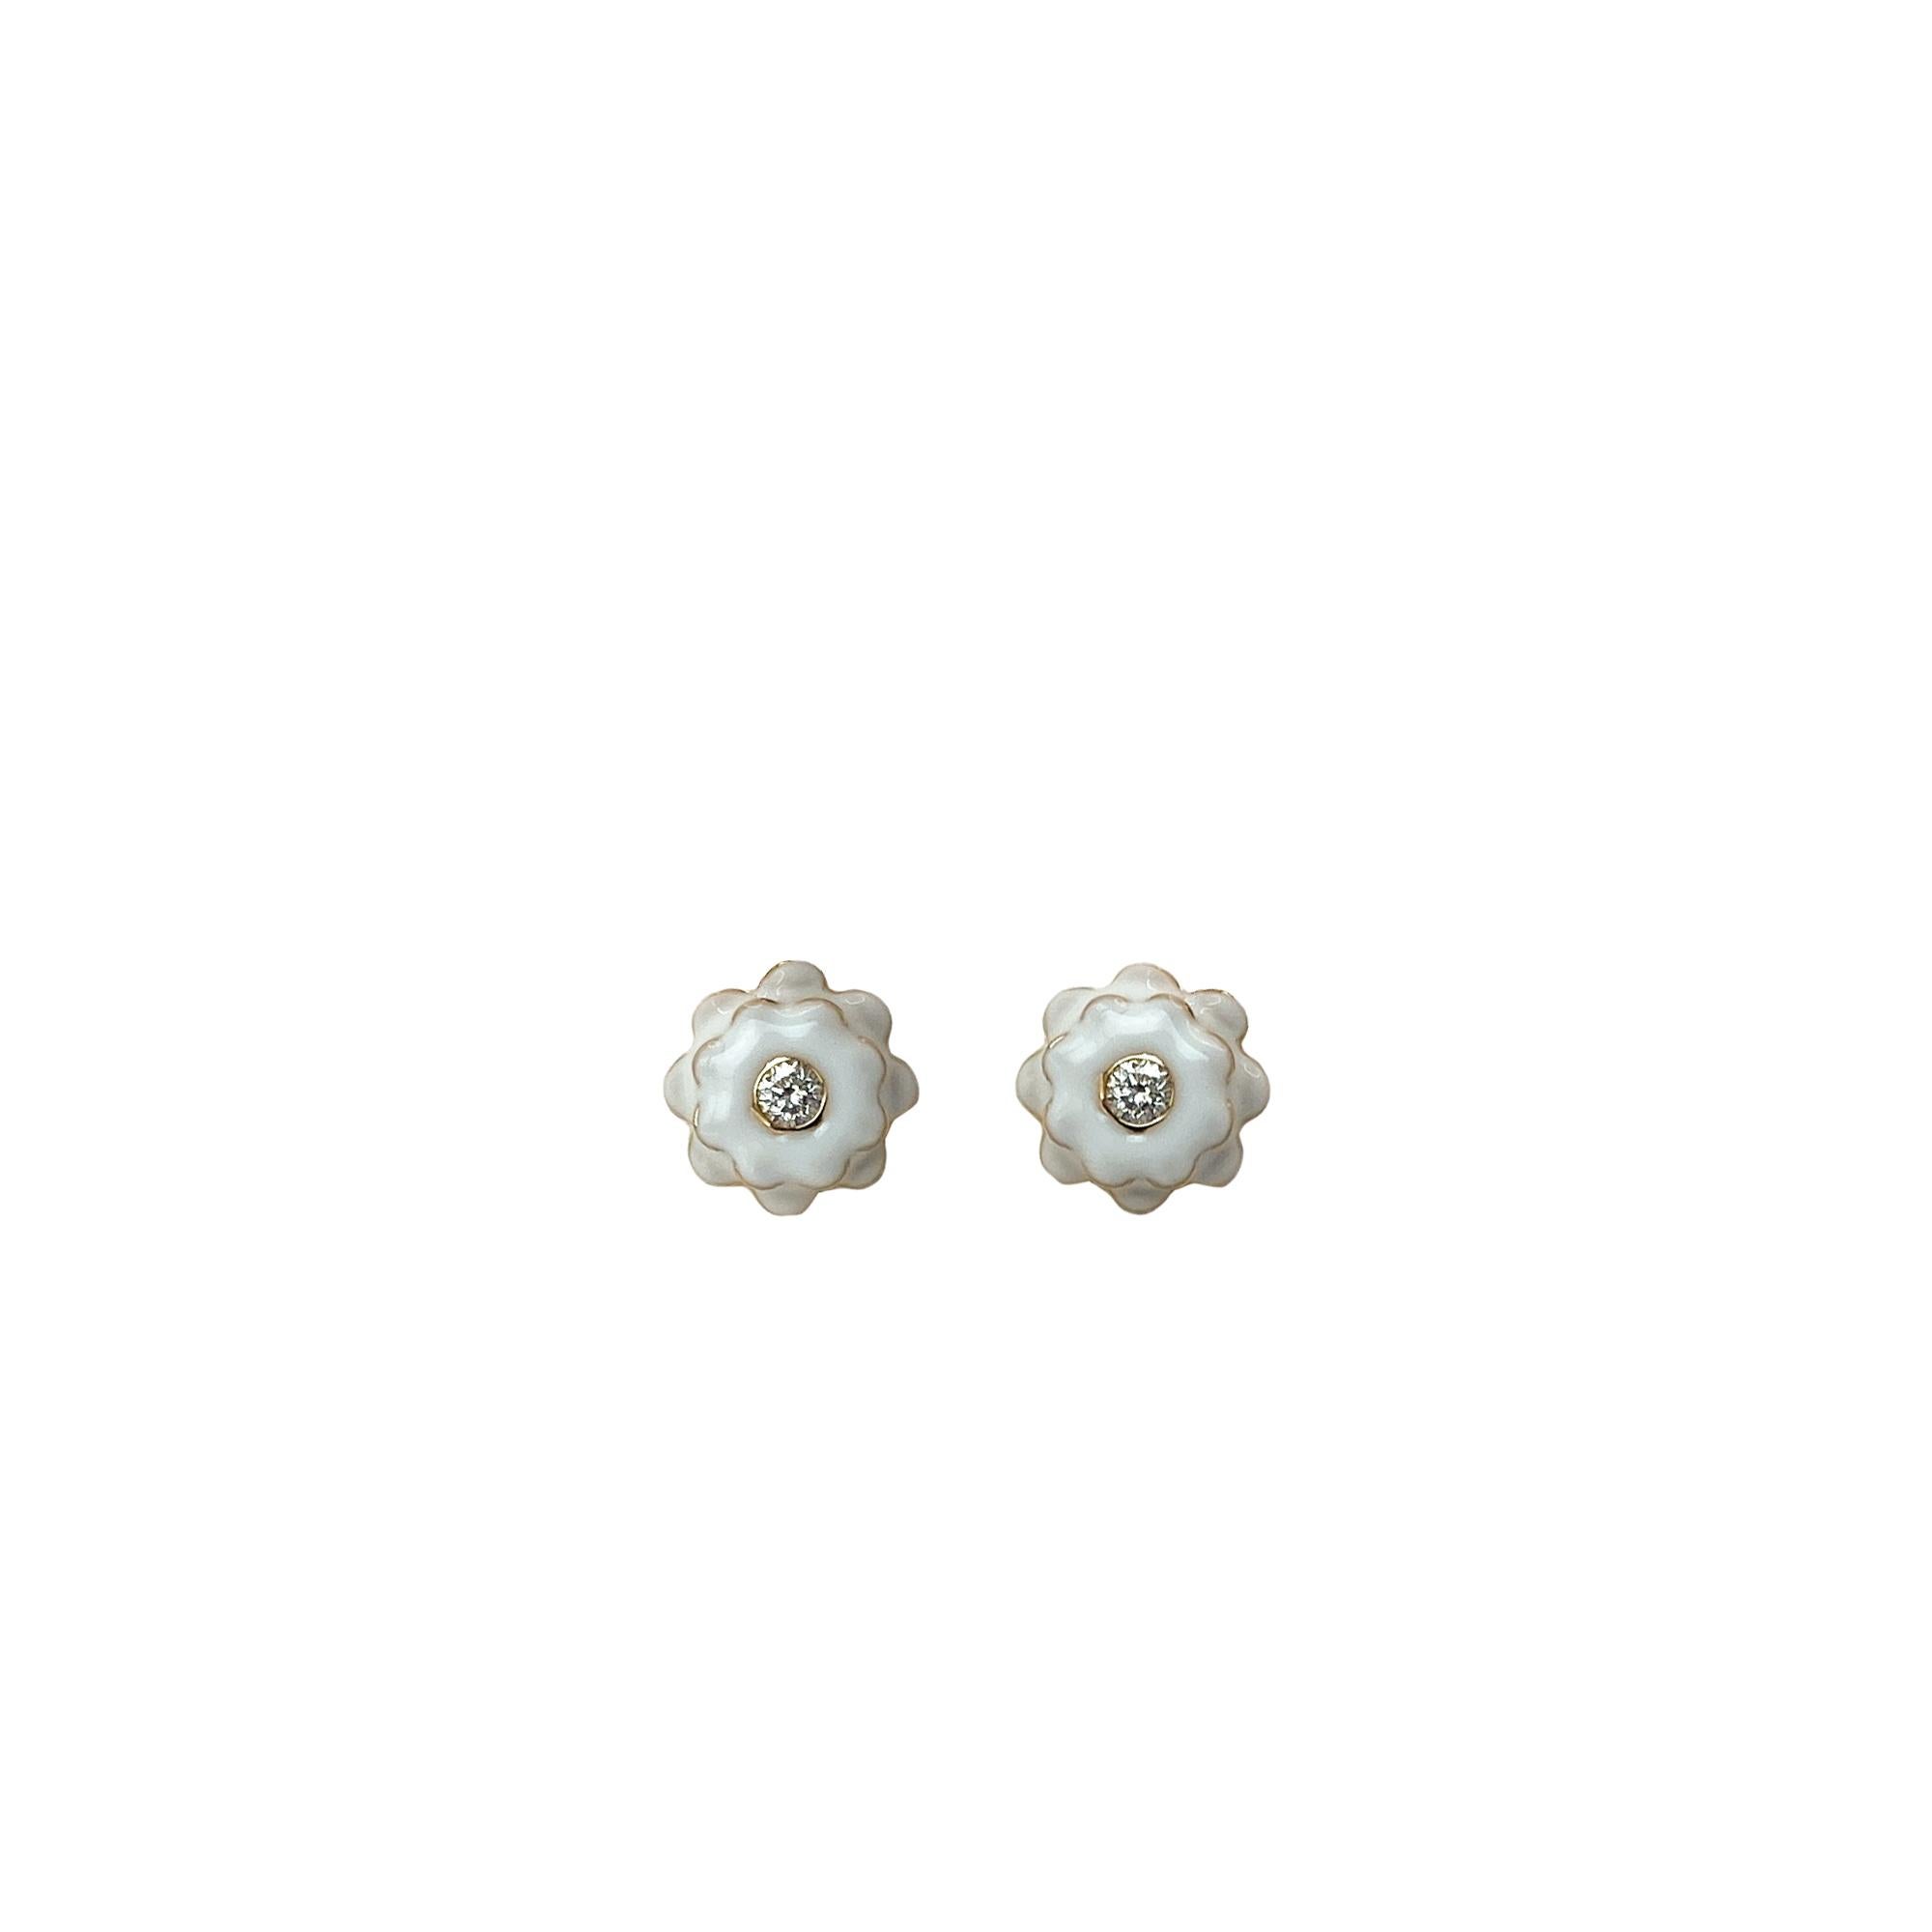 Memento Single Diamond and White Enamel Flower Charm Pendant MINI In New Condition For Sale In Houston, TX